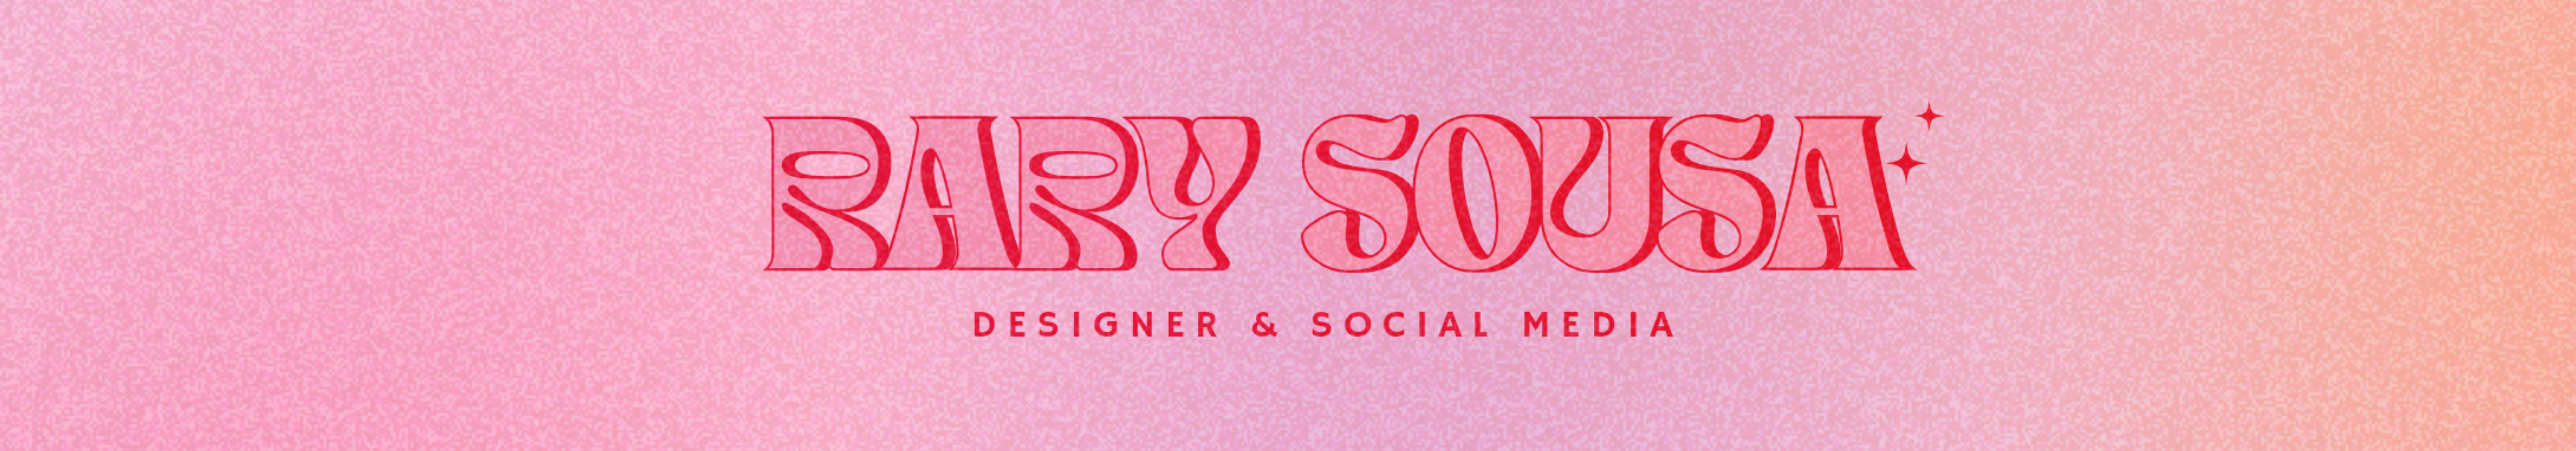 Profil-Banner von Rary Sousa